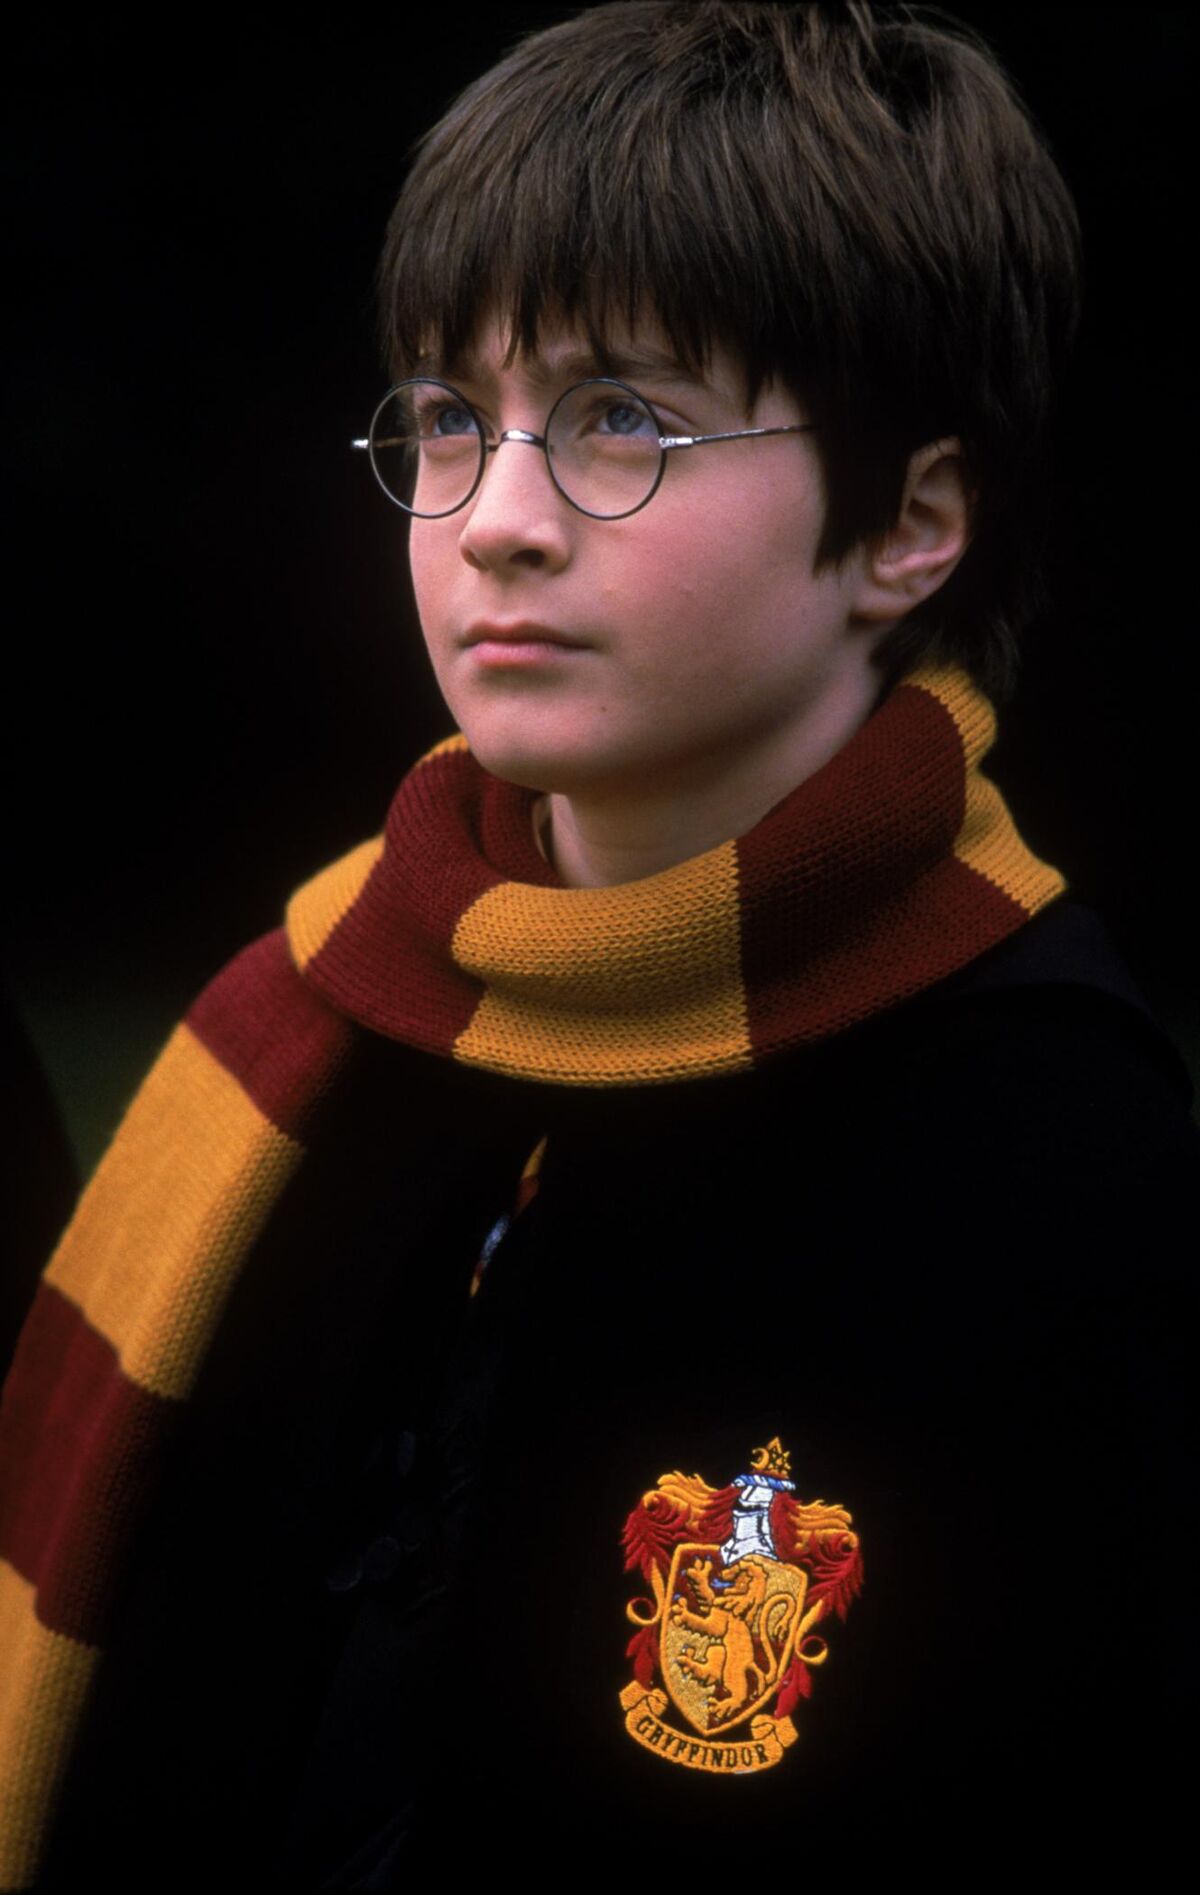 Hogwarts Scarf - Classic, Harry Potter